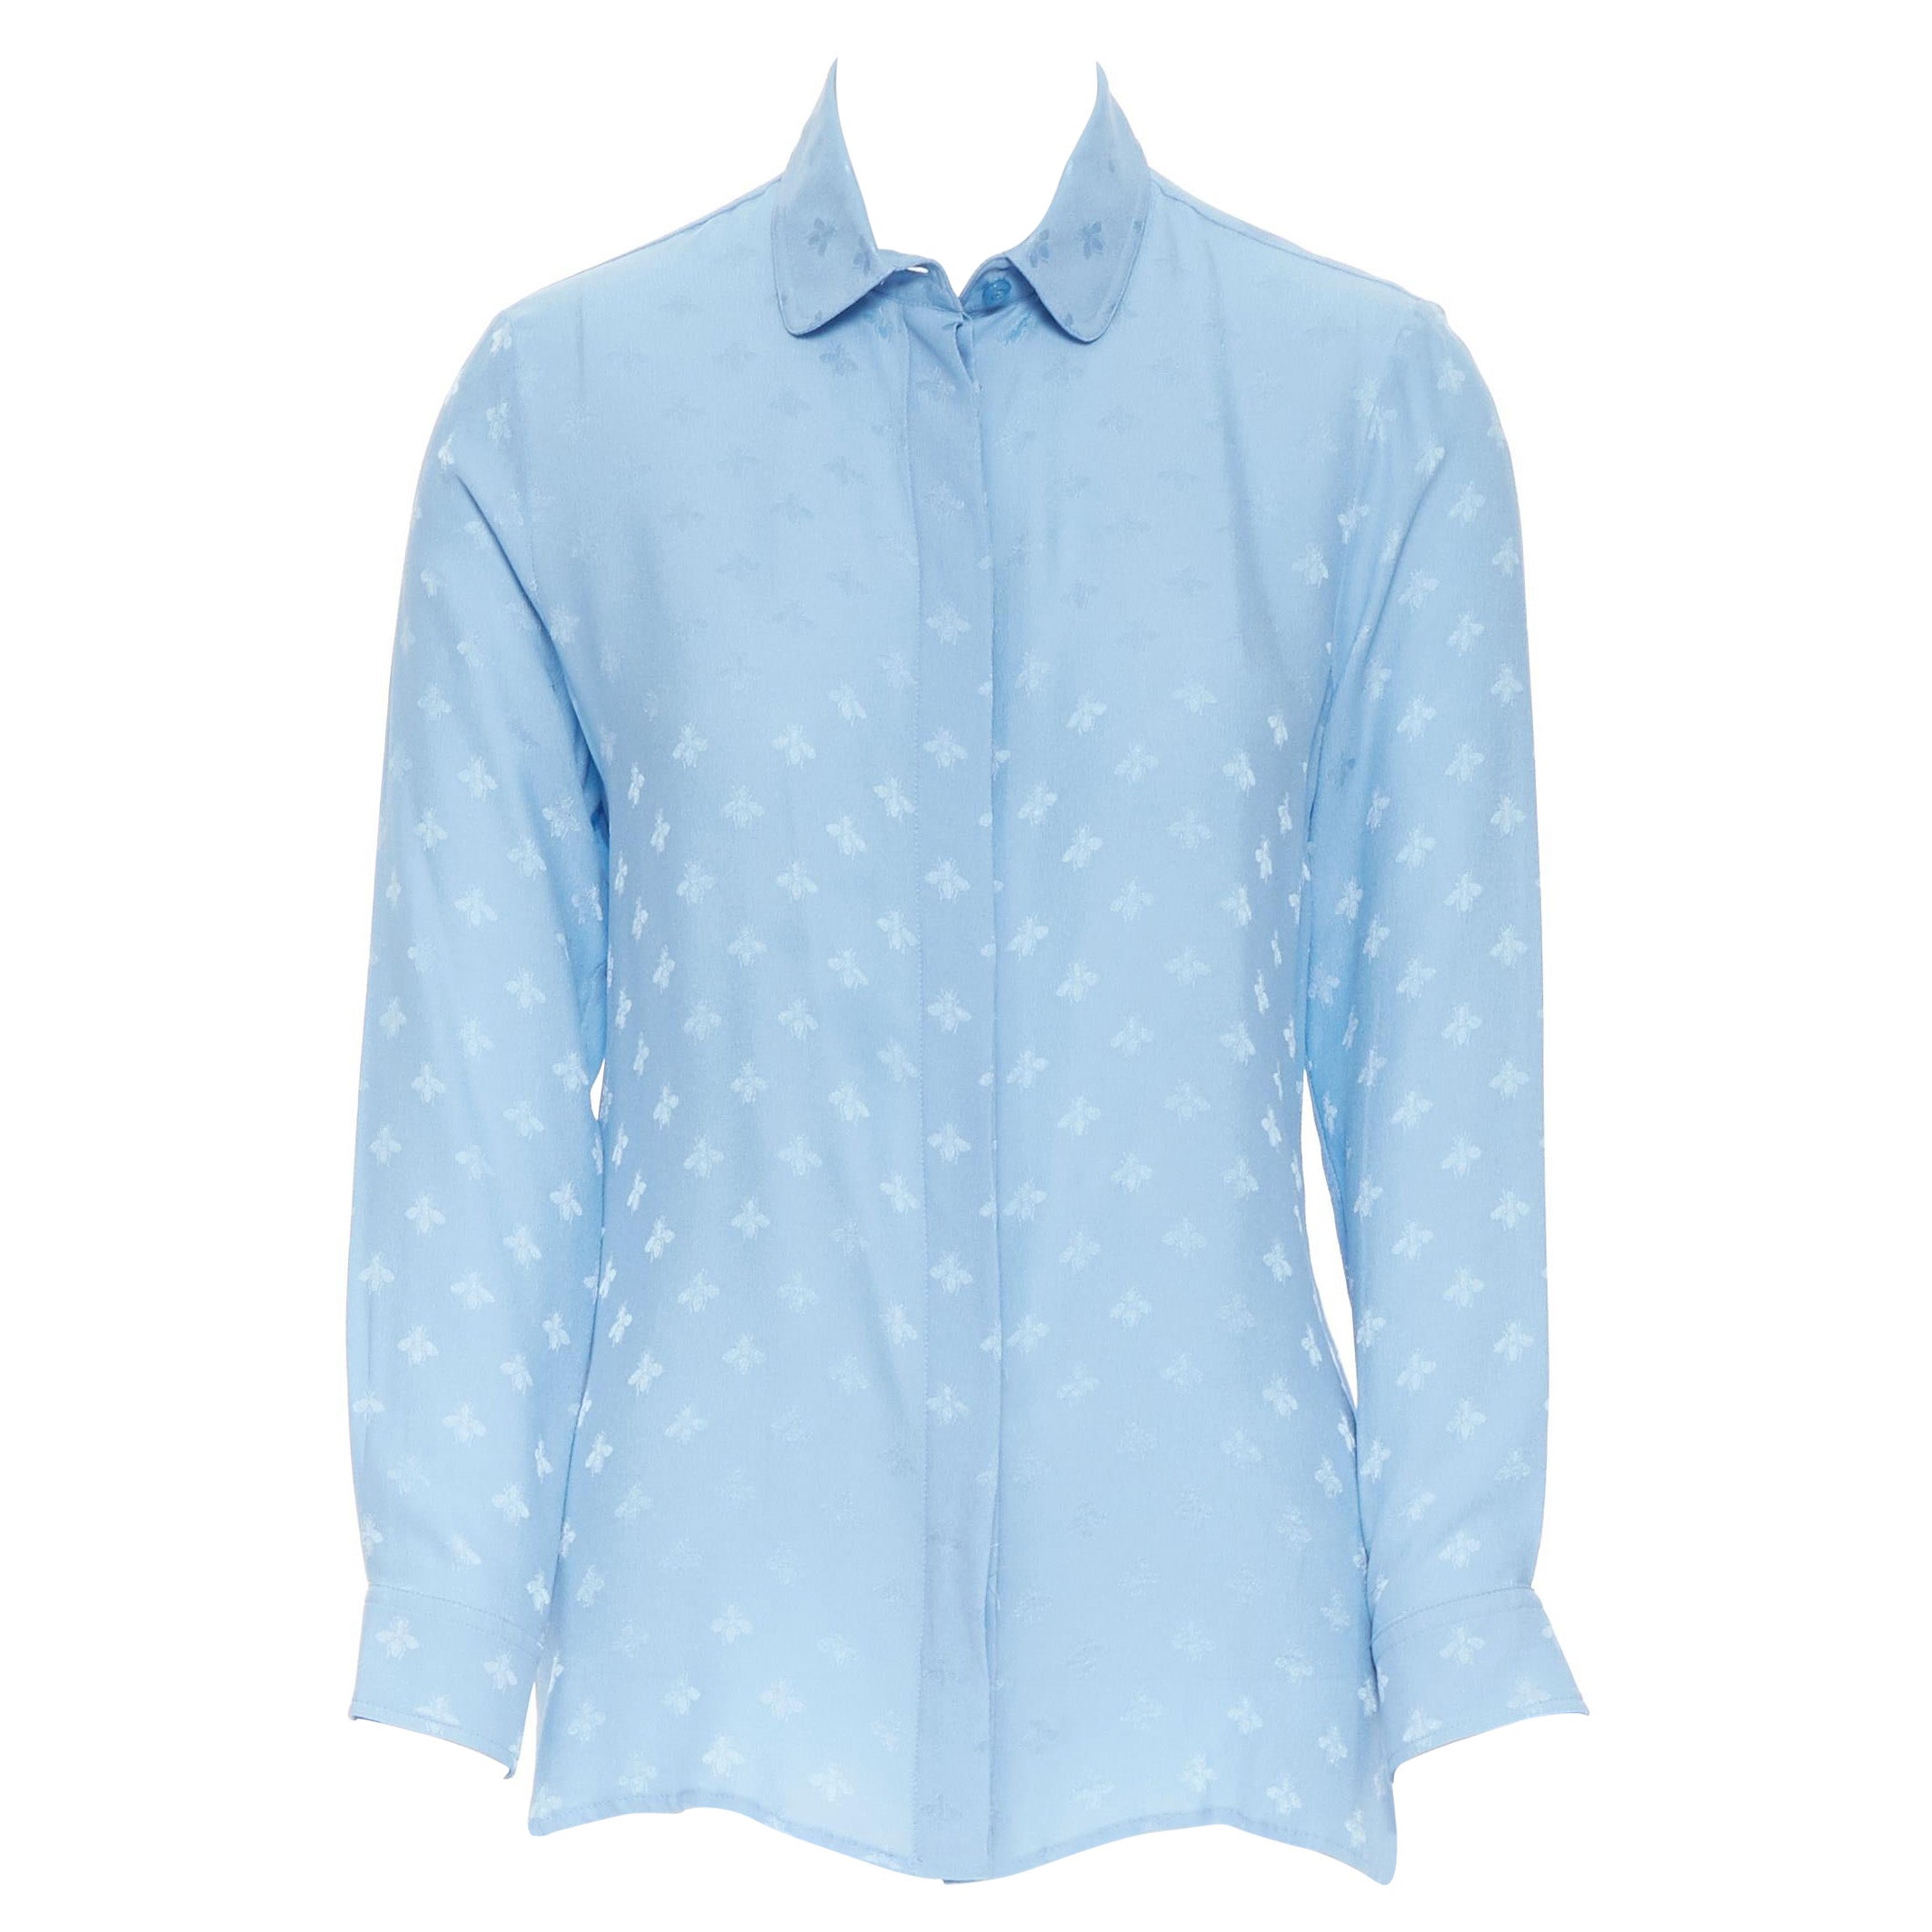 GUCCI 100% Cambridge silk sky blue bee jacquard club collar shirt IT38 XS